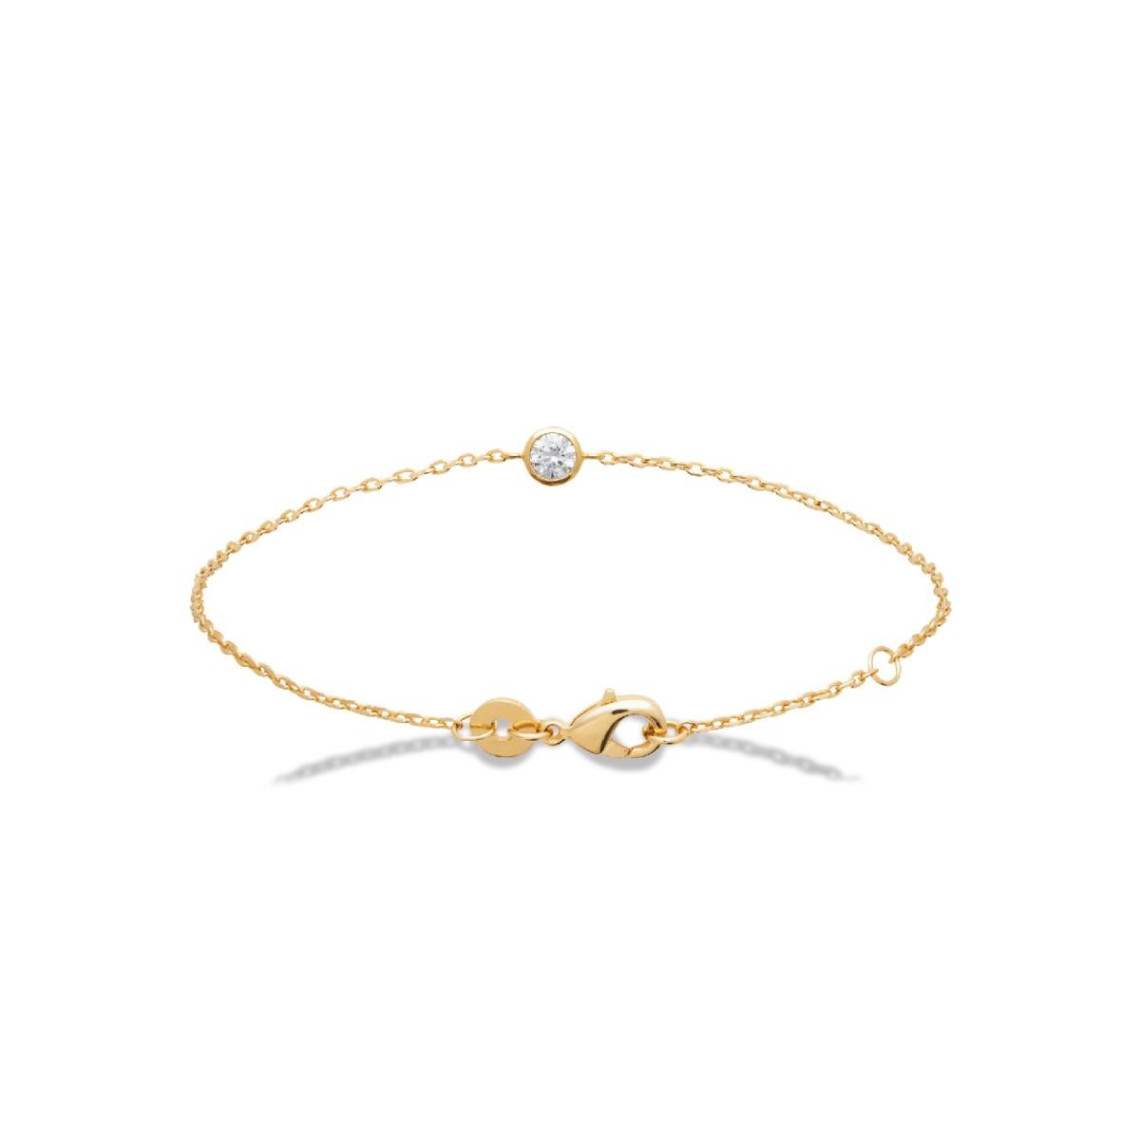 bracelet femme plaqué or blanc serti clos serti clos classique - uwz63uzv